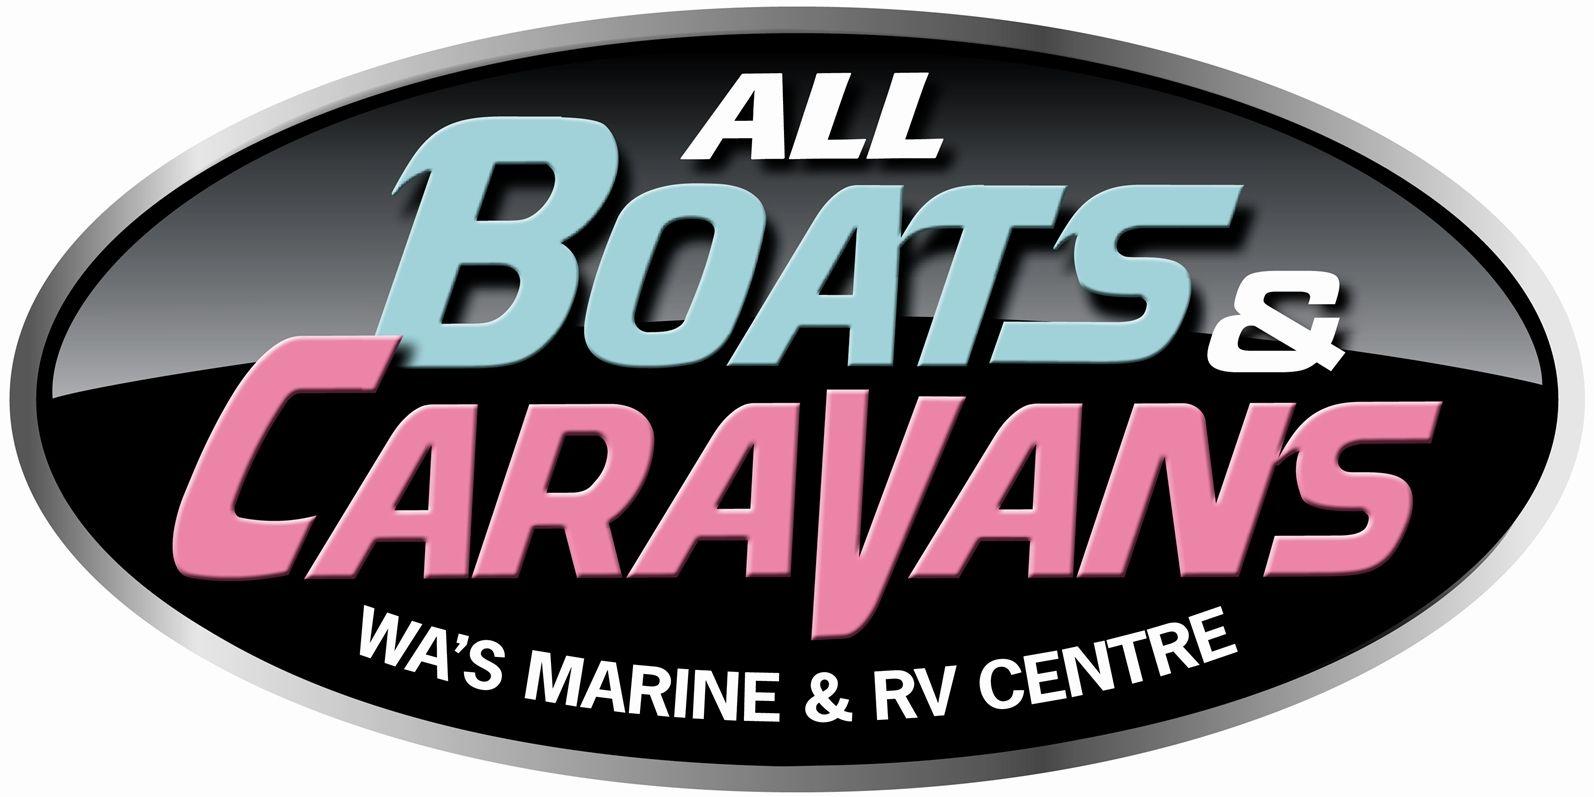 Jeep Tattoo Logo - All Boats & Caravans Logo 2 | Tattoo Boats |